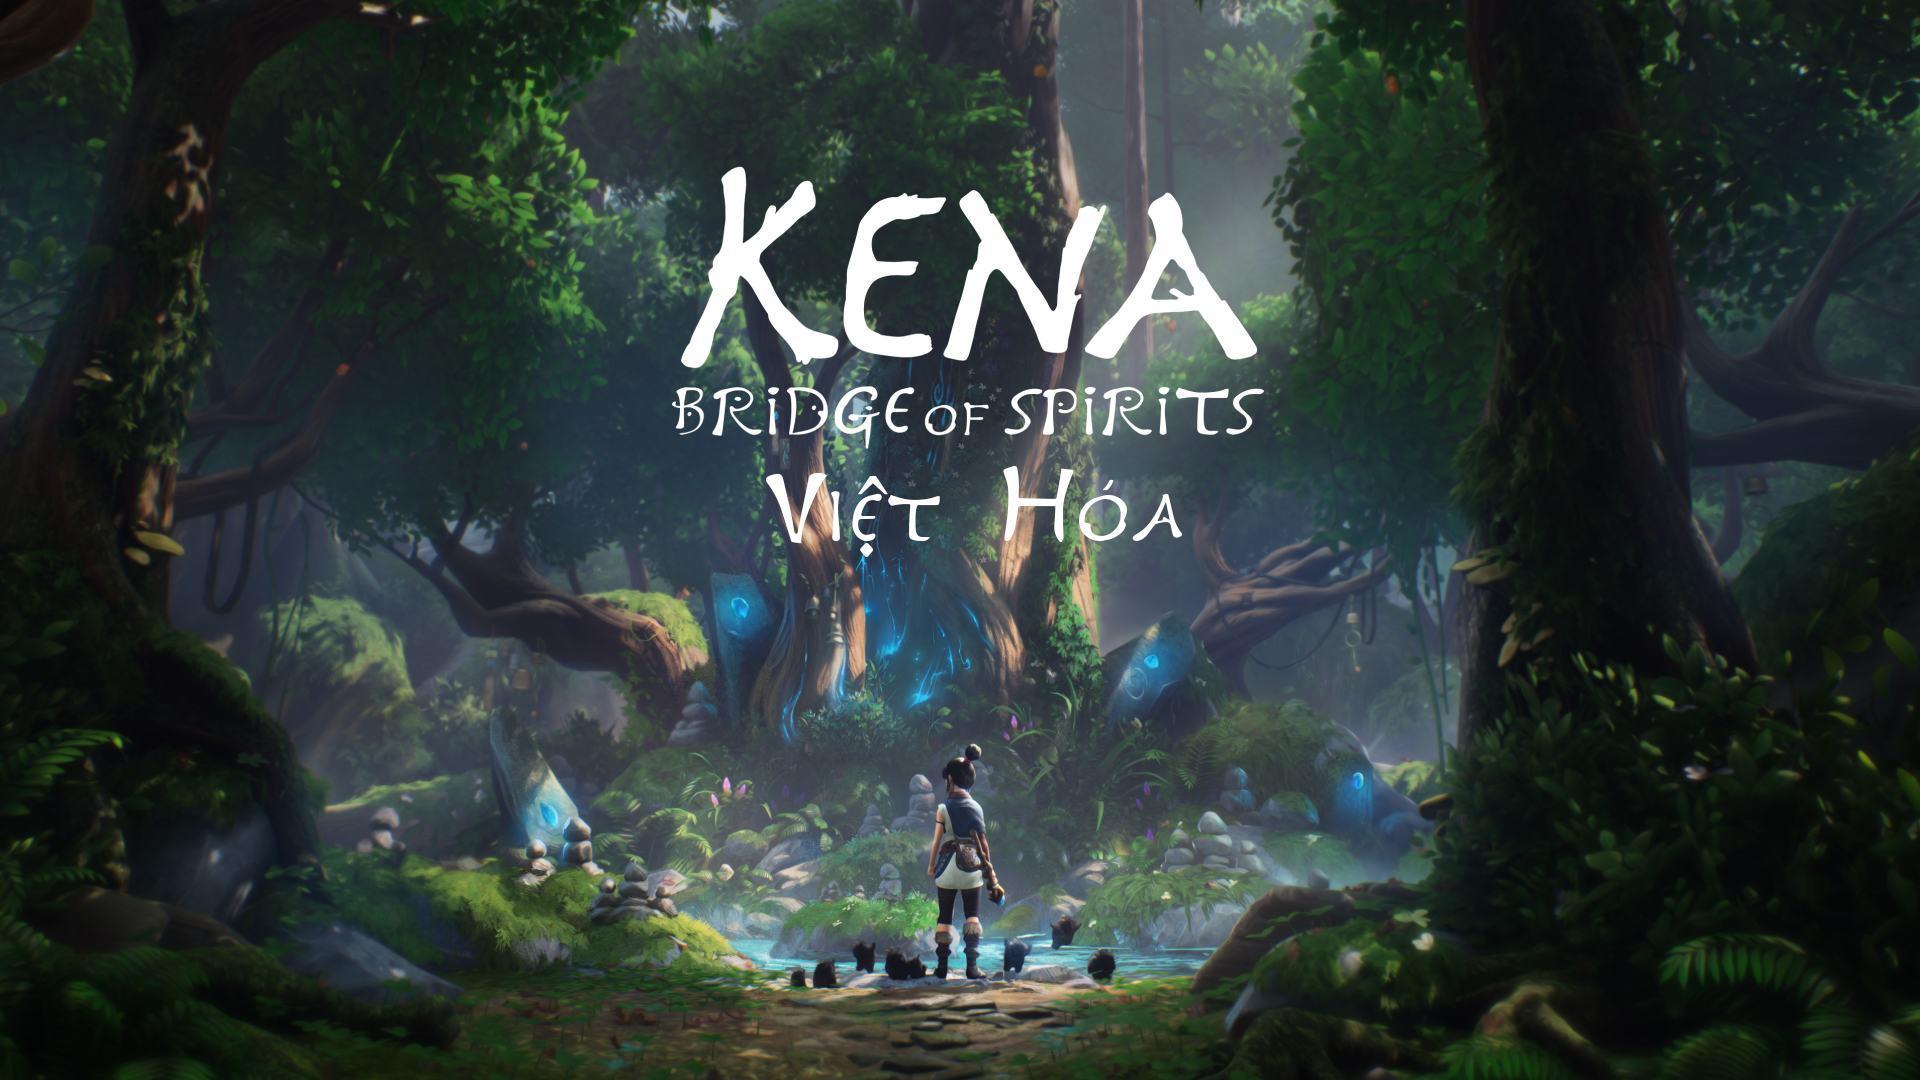 kena-bridge-of-spirits-vi-t-h-a-vngame